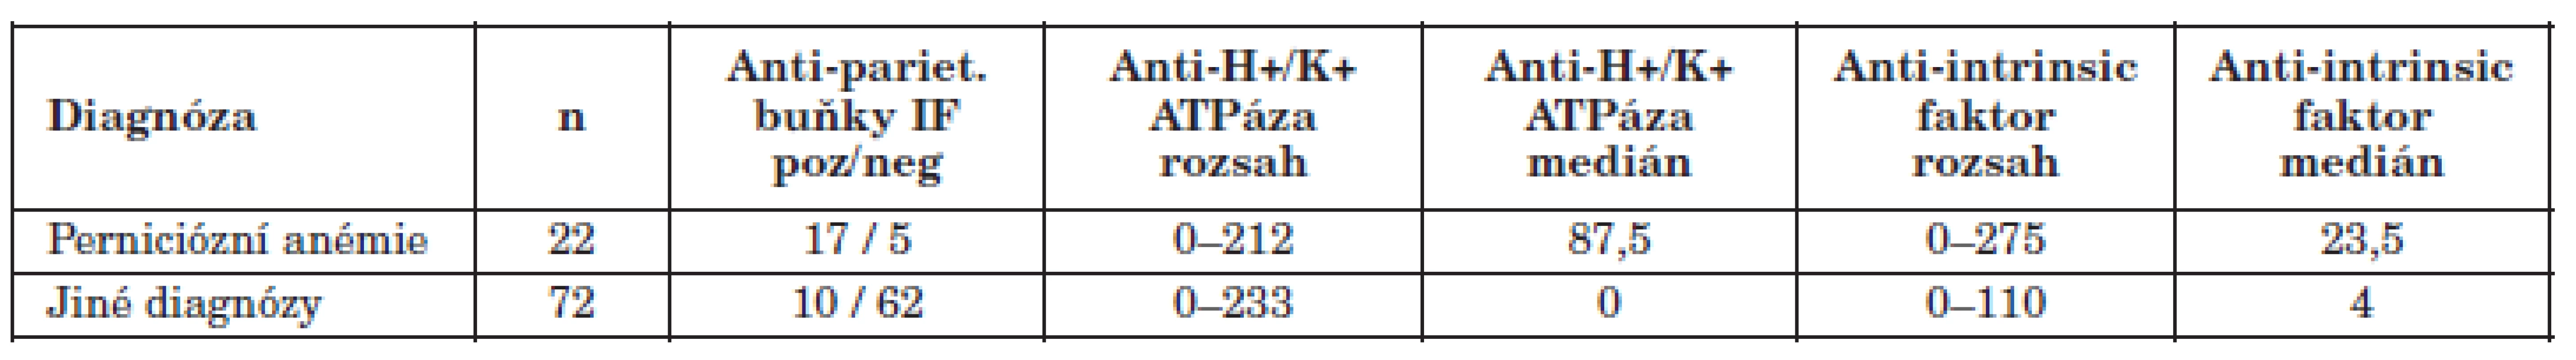 Charakteristika souborů podle diagnózy
Table 1. Detection of anti-H+/K+ ATPase and anti-intrinsic factor autoantibodies by diagnosis